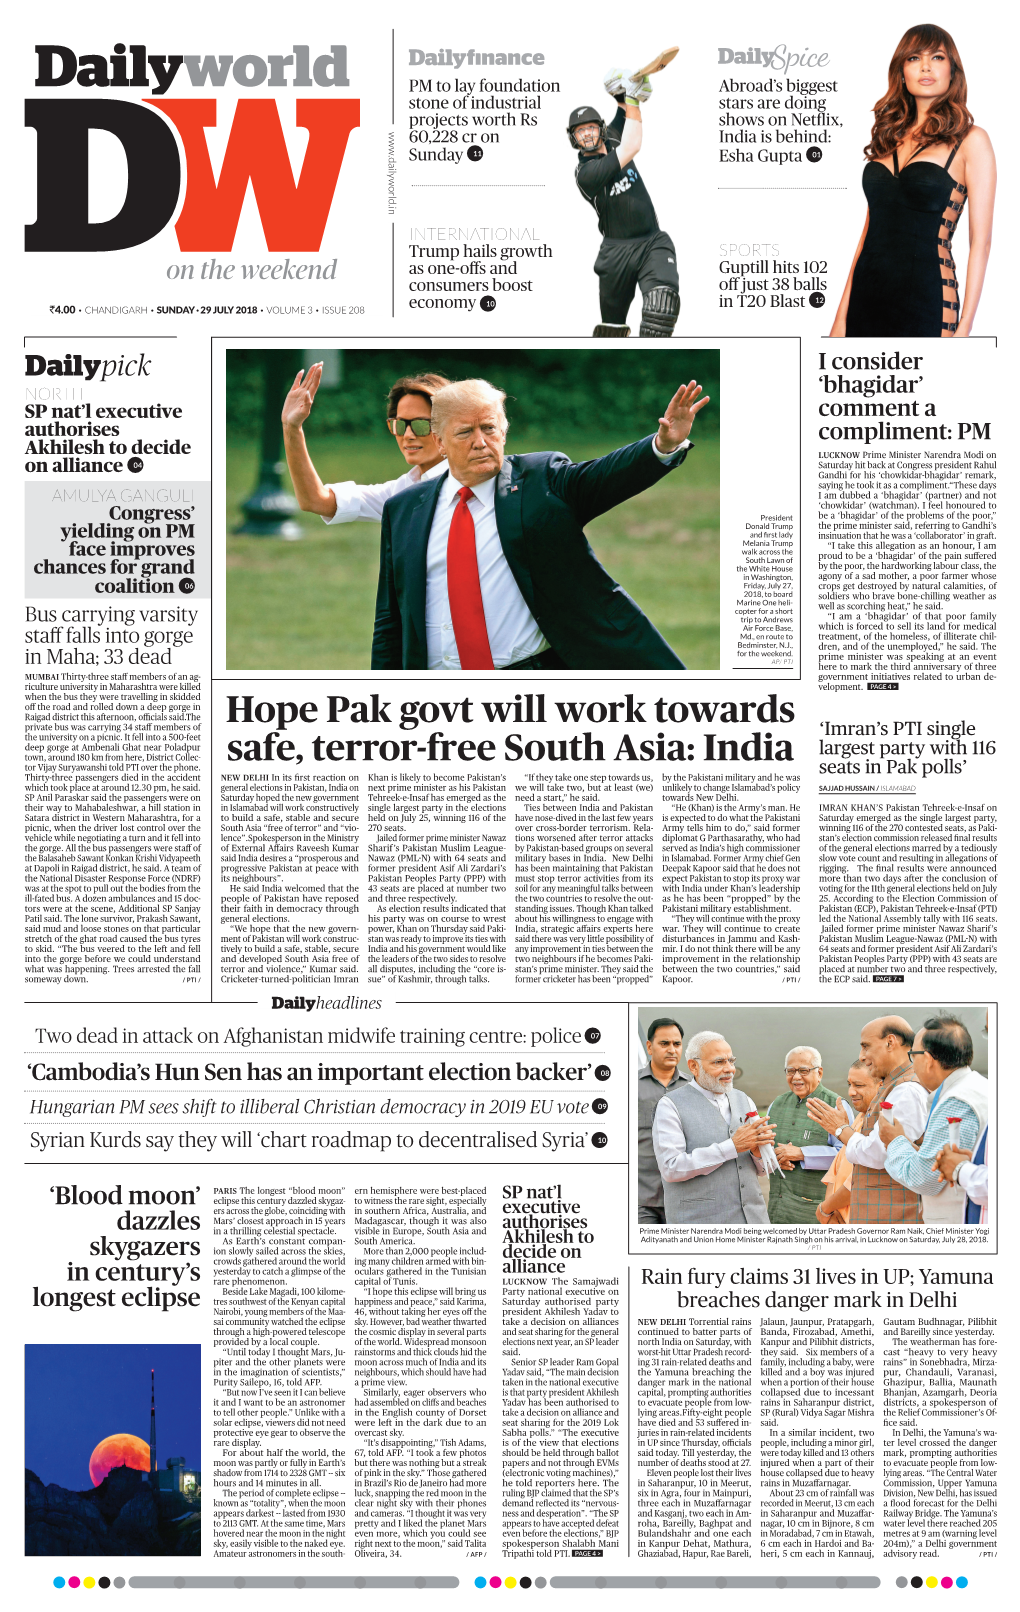 Hope Pak Govt Will Work Towards Safe, Terror-Free